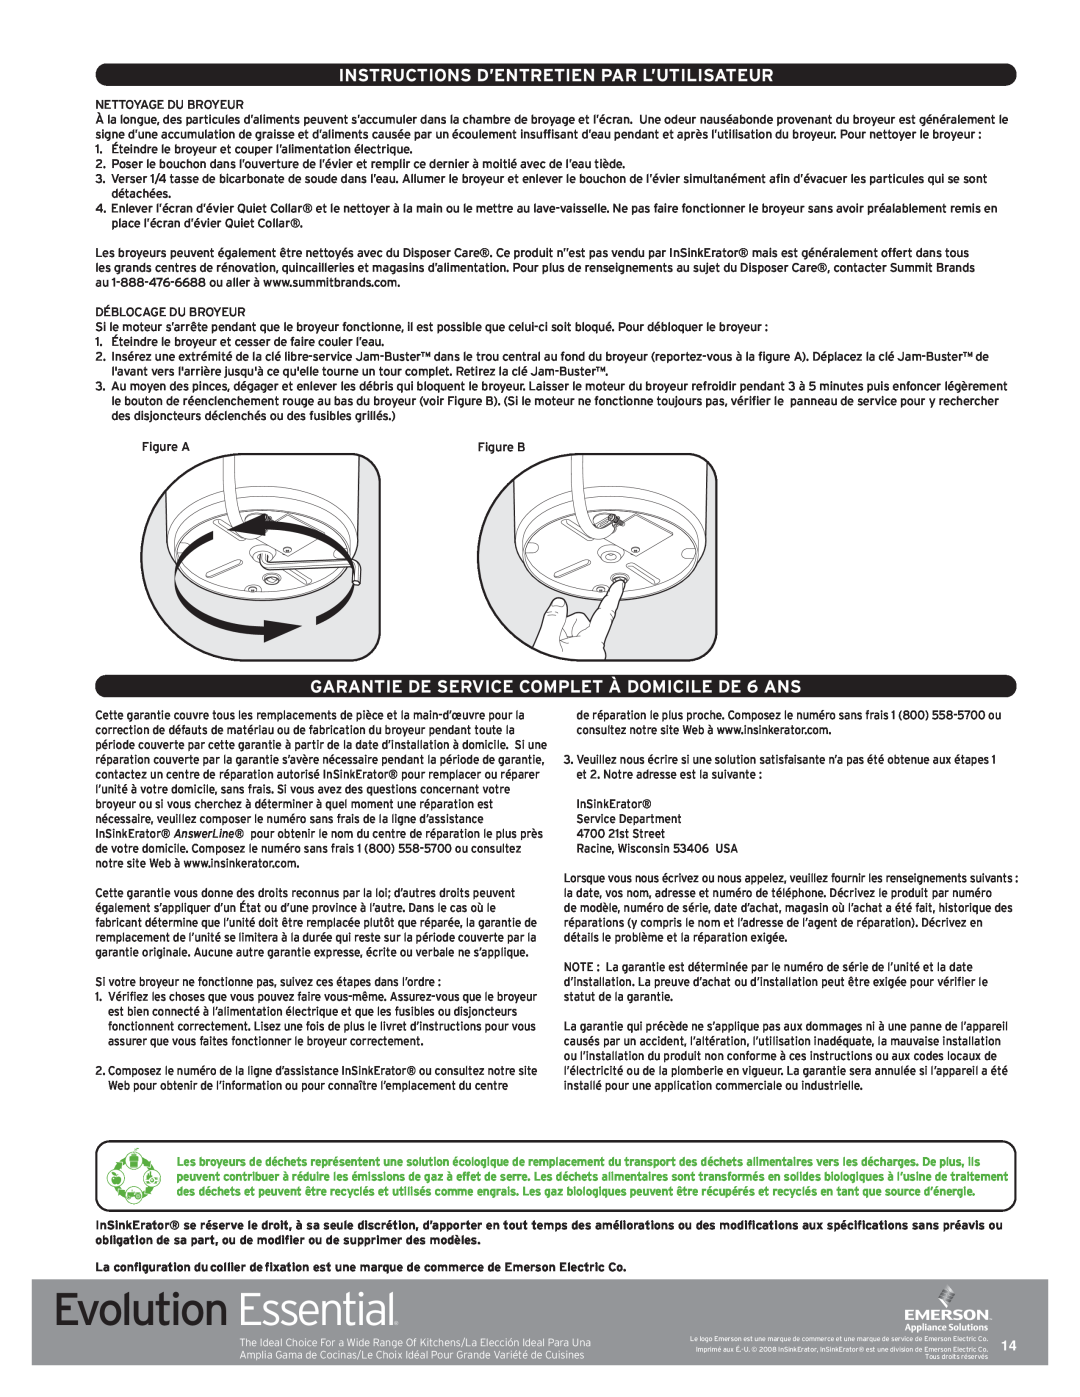 InSinkErator Evolution Essential manual Instructions D’Entretien Par L’Utilisateur 